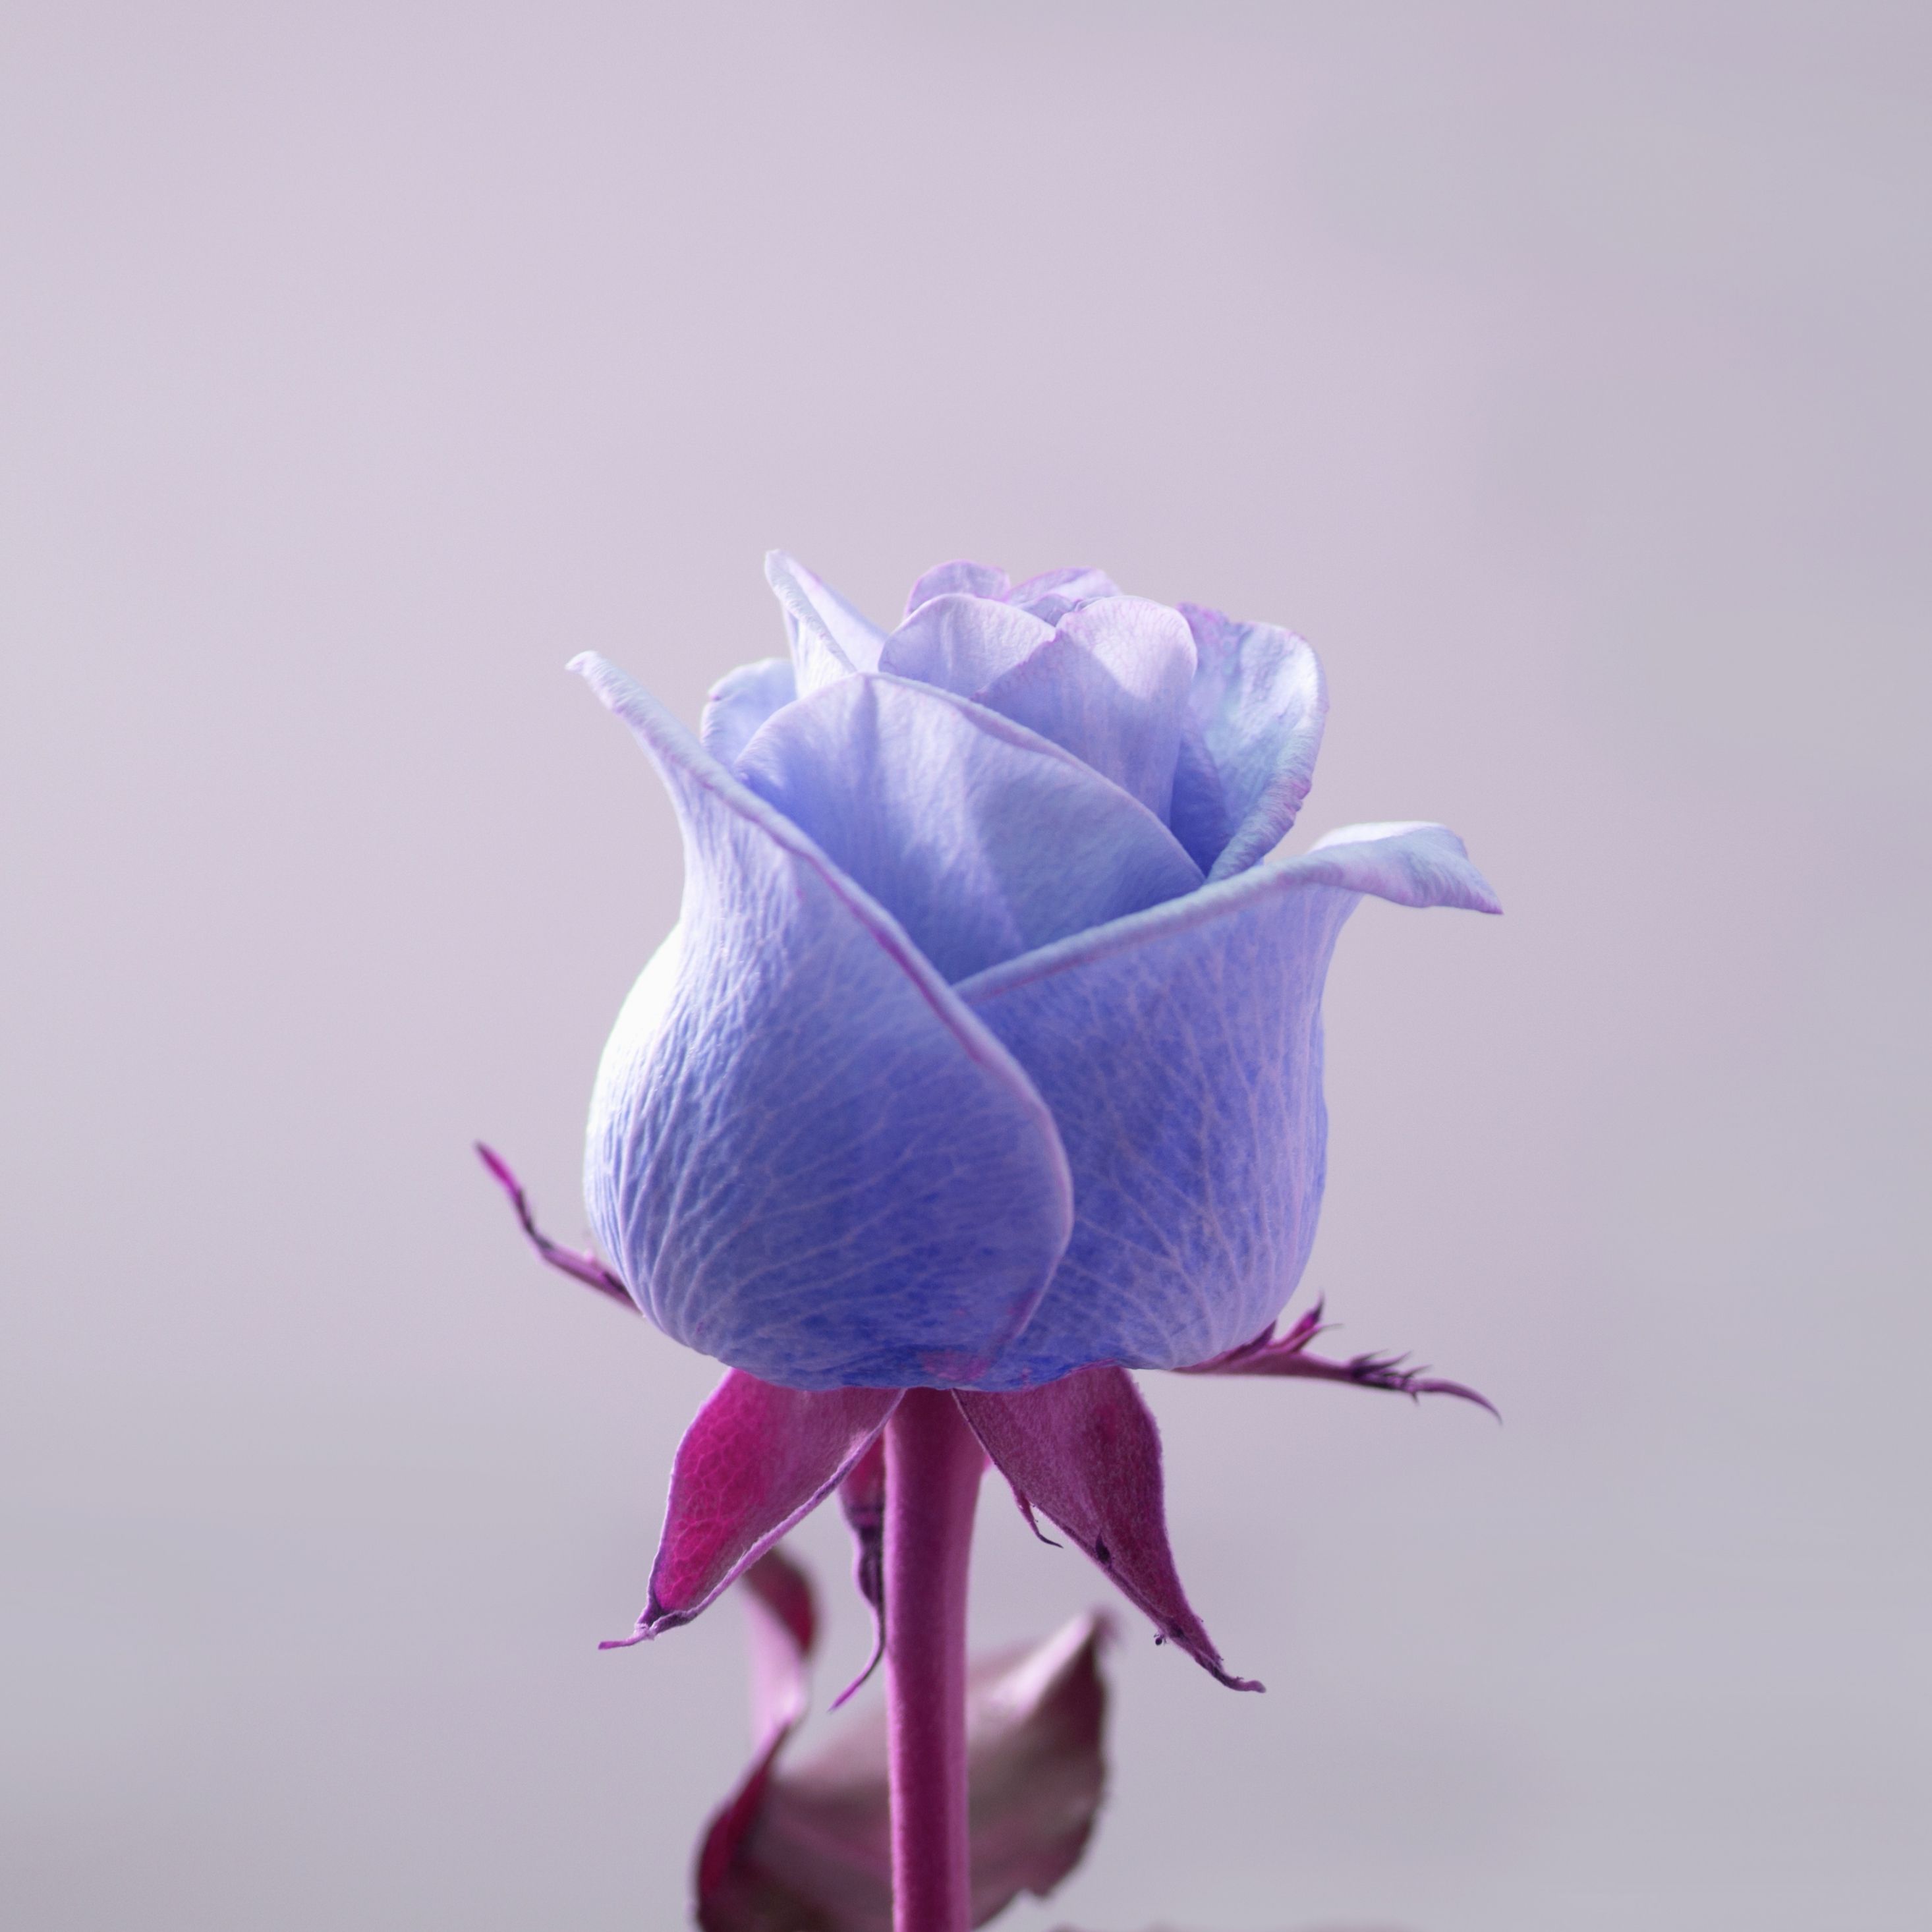 Desktop Wallpaper Blue Rose, Bud, Close Up, Portrait, 4k, HD Image, Picture, Background, A69e7f